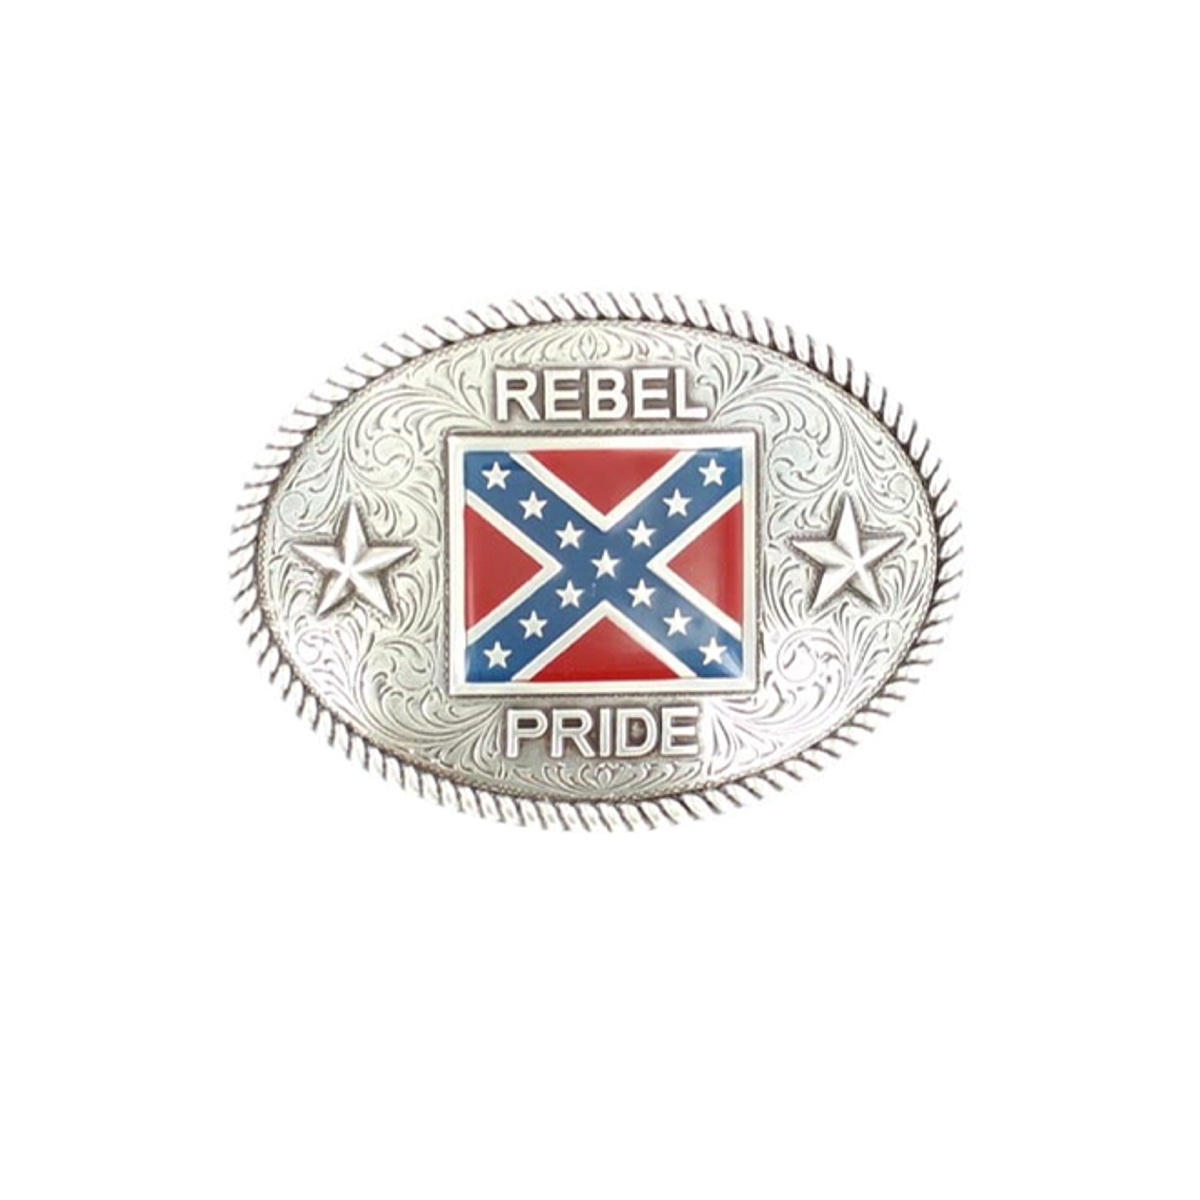 MF-37052 Belt Buckle "Rebel Pride" w/Confederate Flag